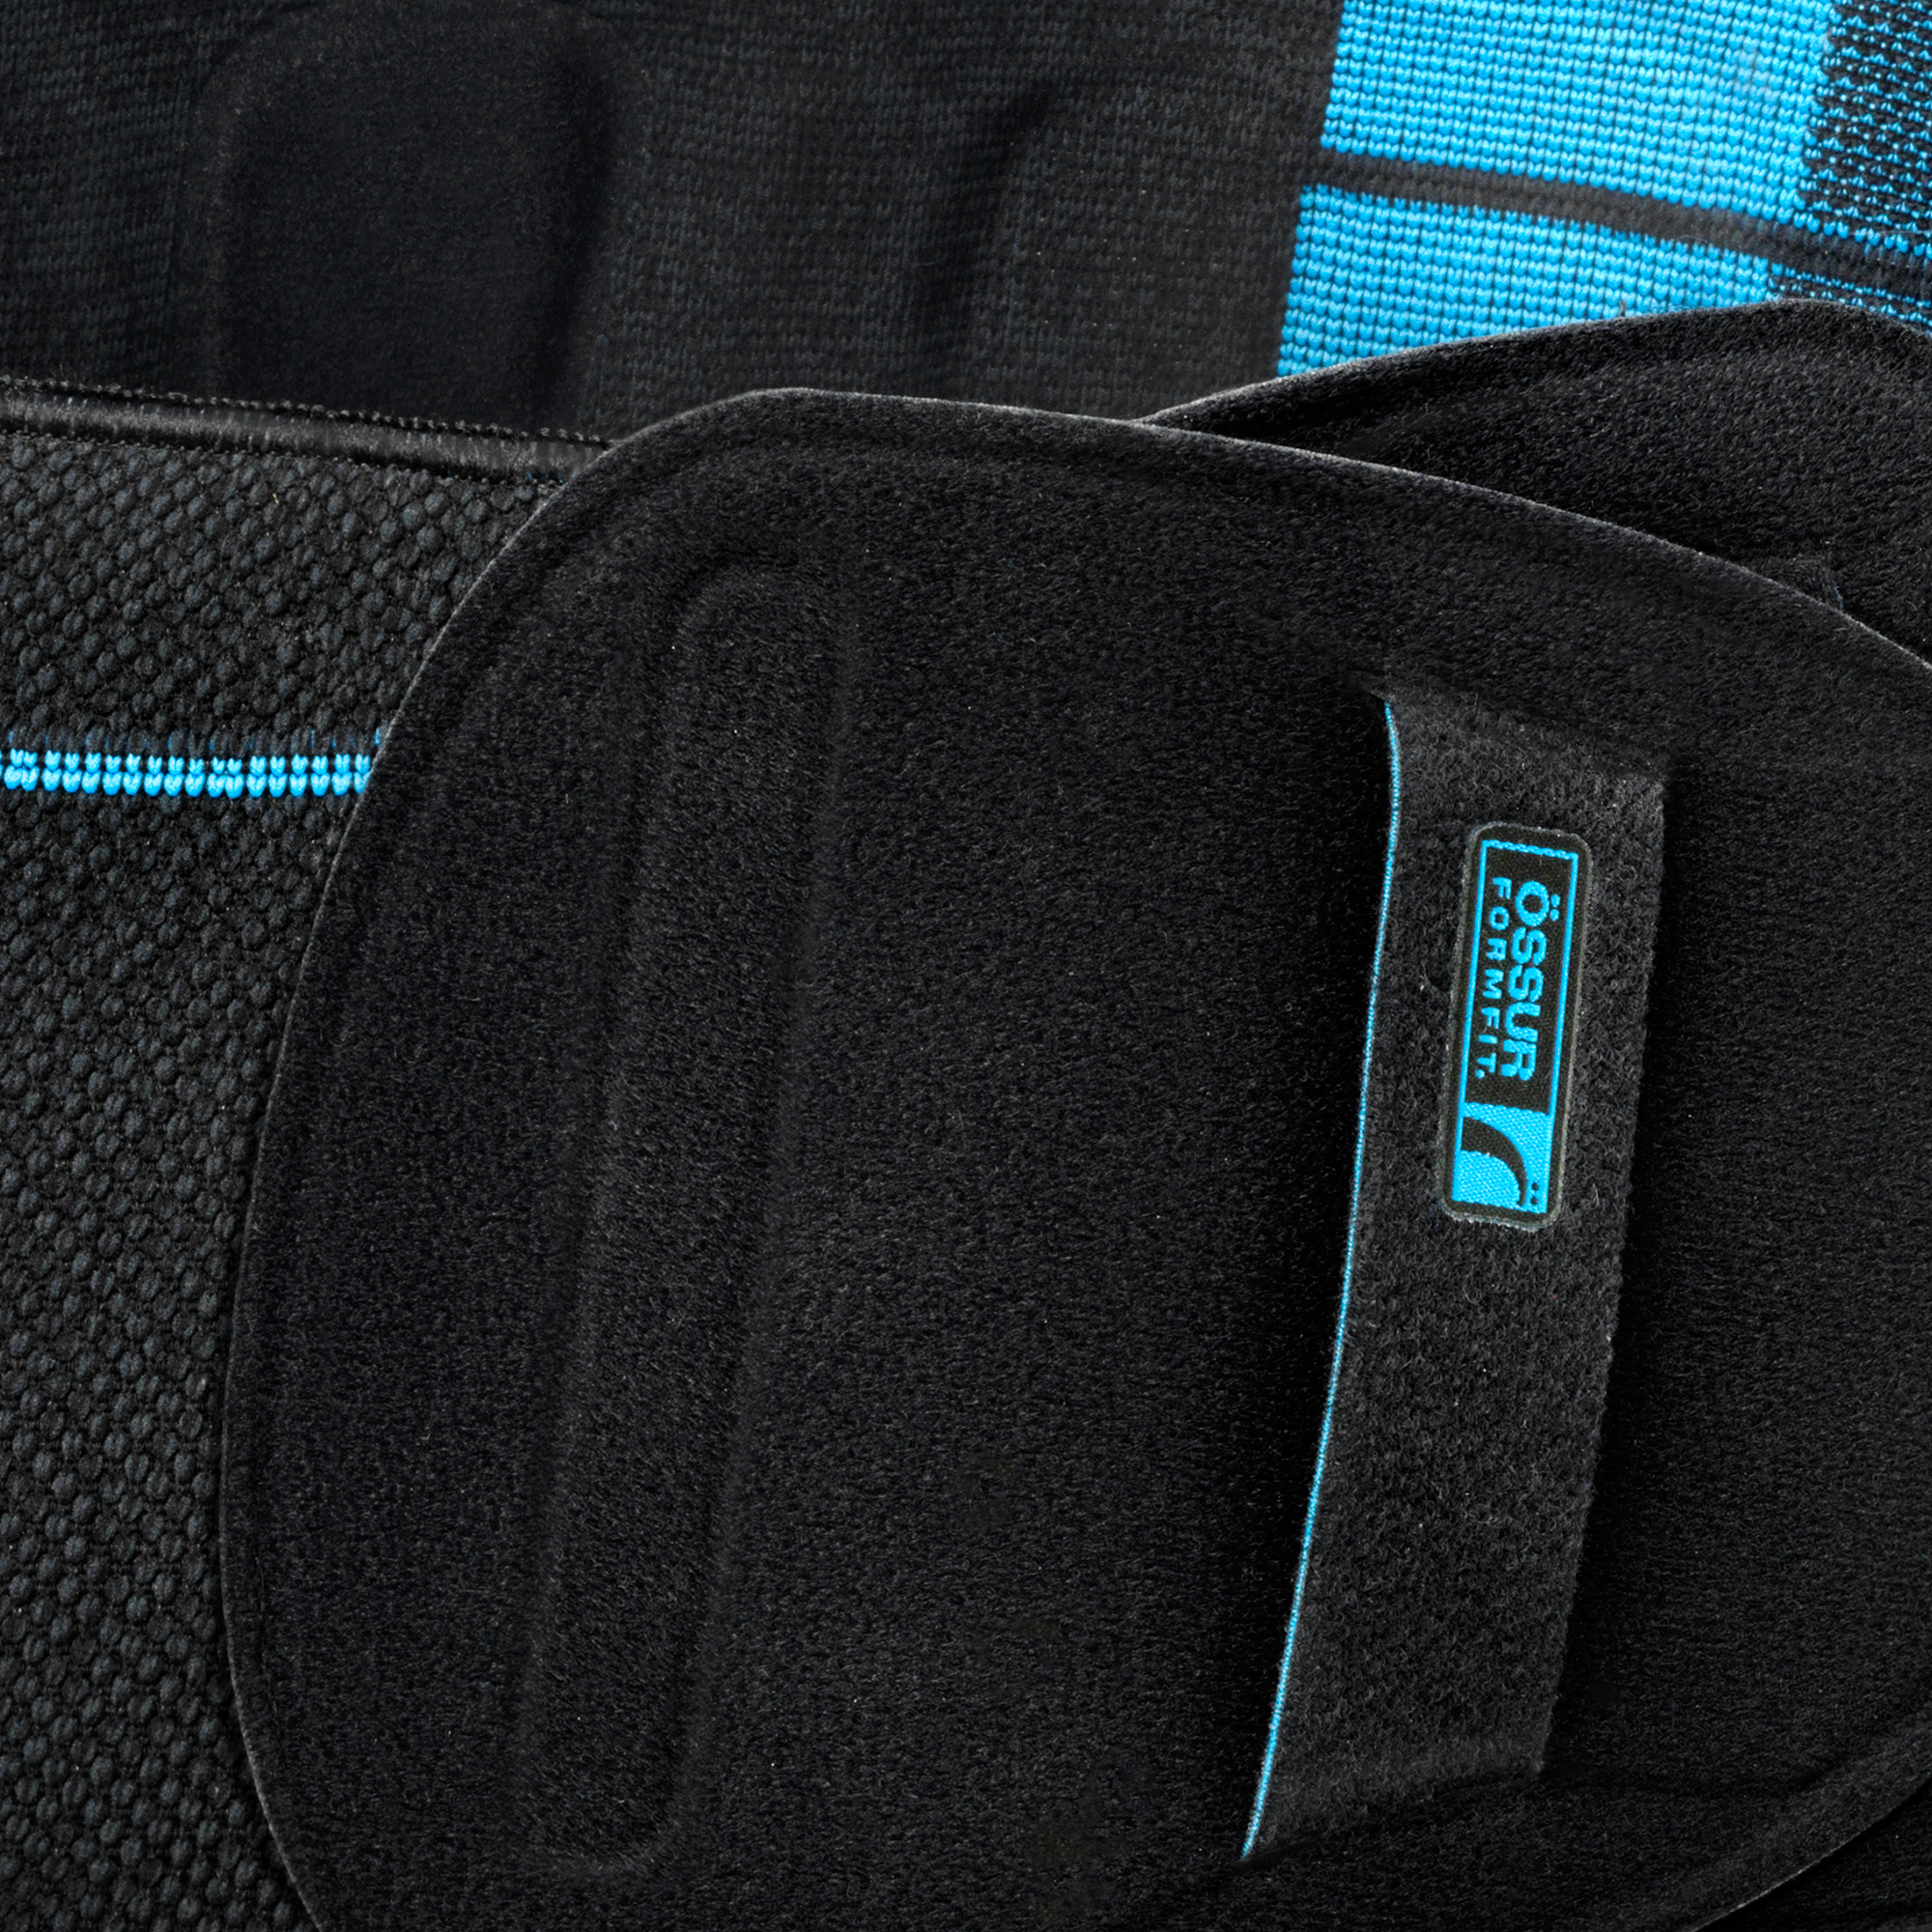 Formfit® Braces, Compression Sleeves